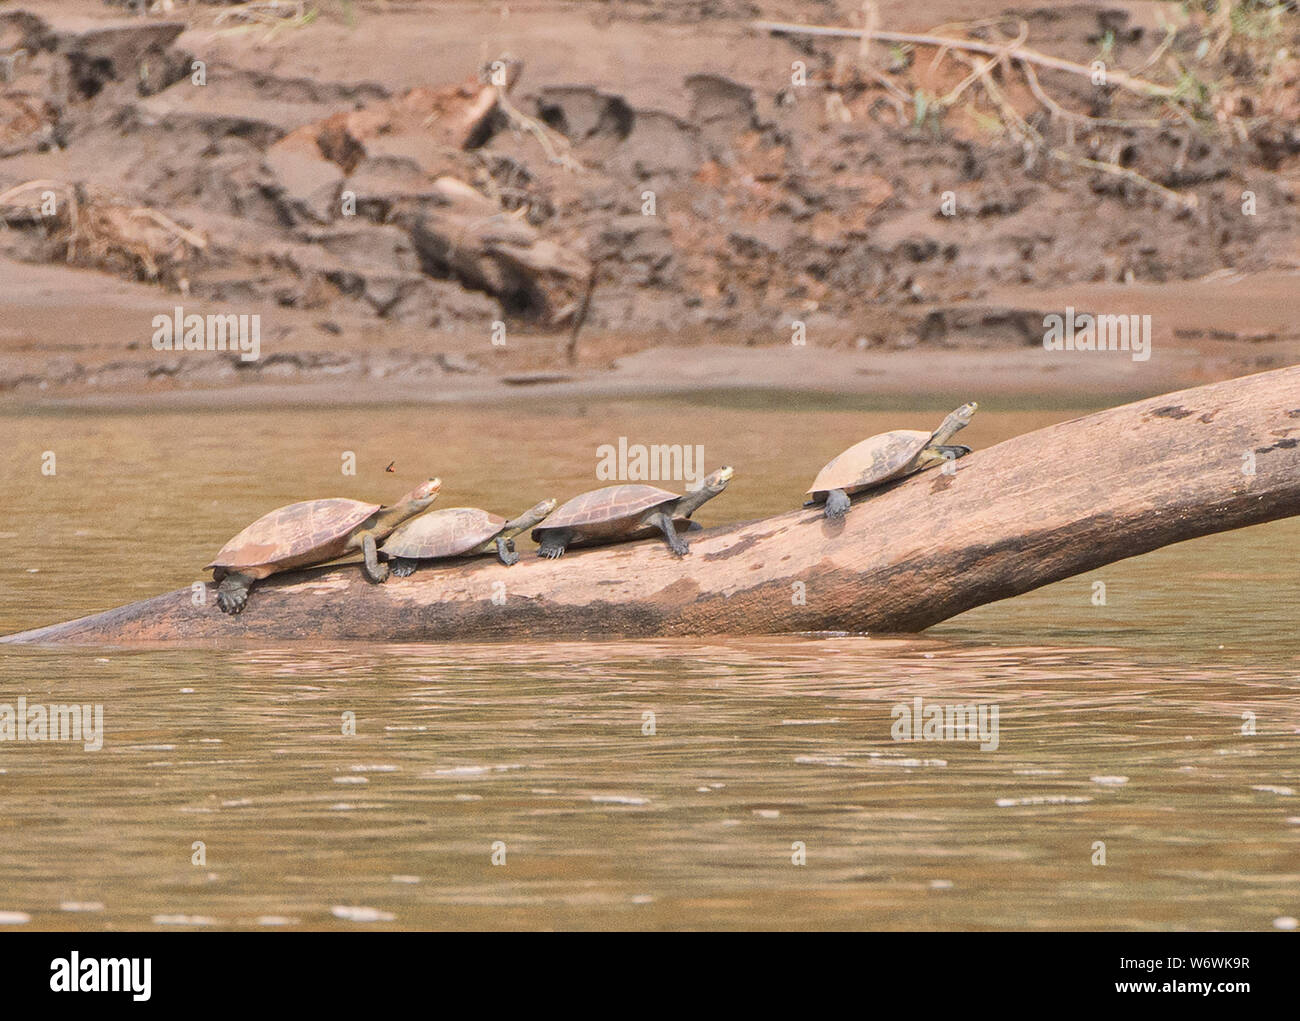 Amazon river turtles on a log, Tambopata River, Peruvian Amazon Stock Photo